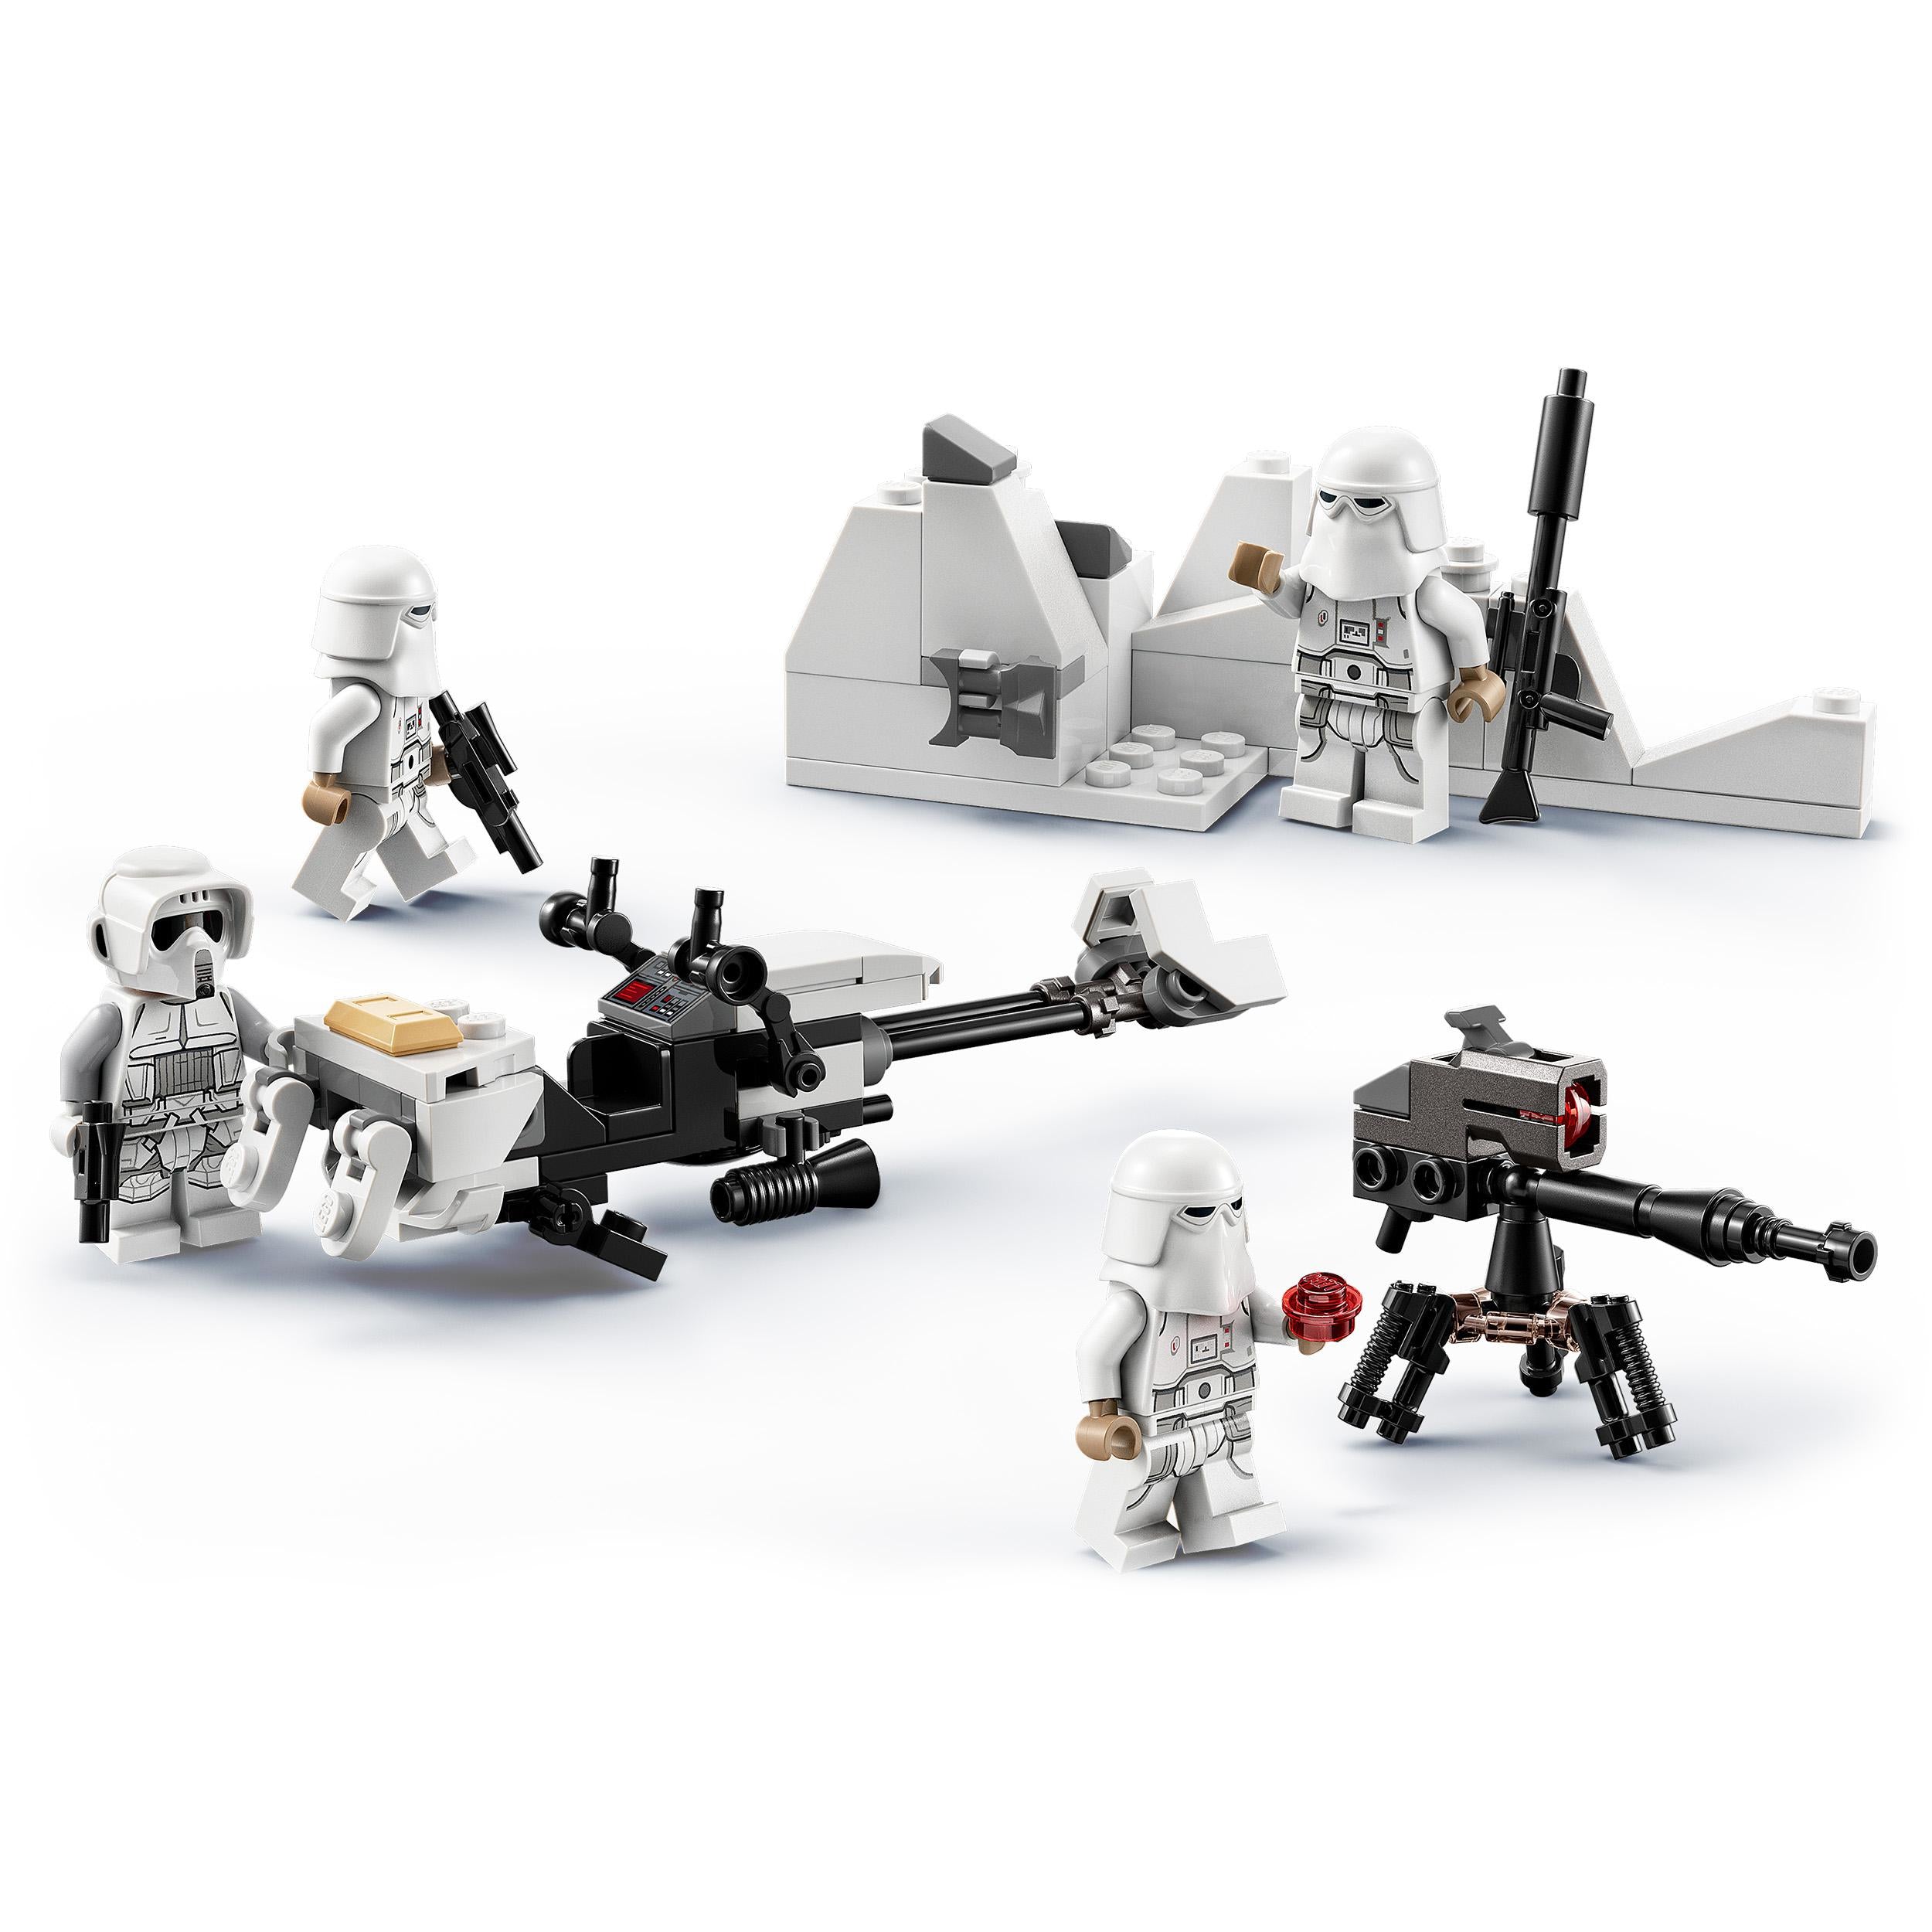 LEGO 75320 Star Wars Snowtrooper Battle Pack Set with 4 Figures, Blaster Guns & Speeder Bike, Building Toy for Kids 6 Years Old